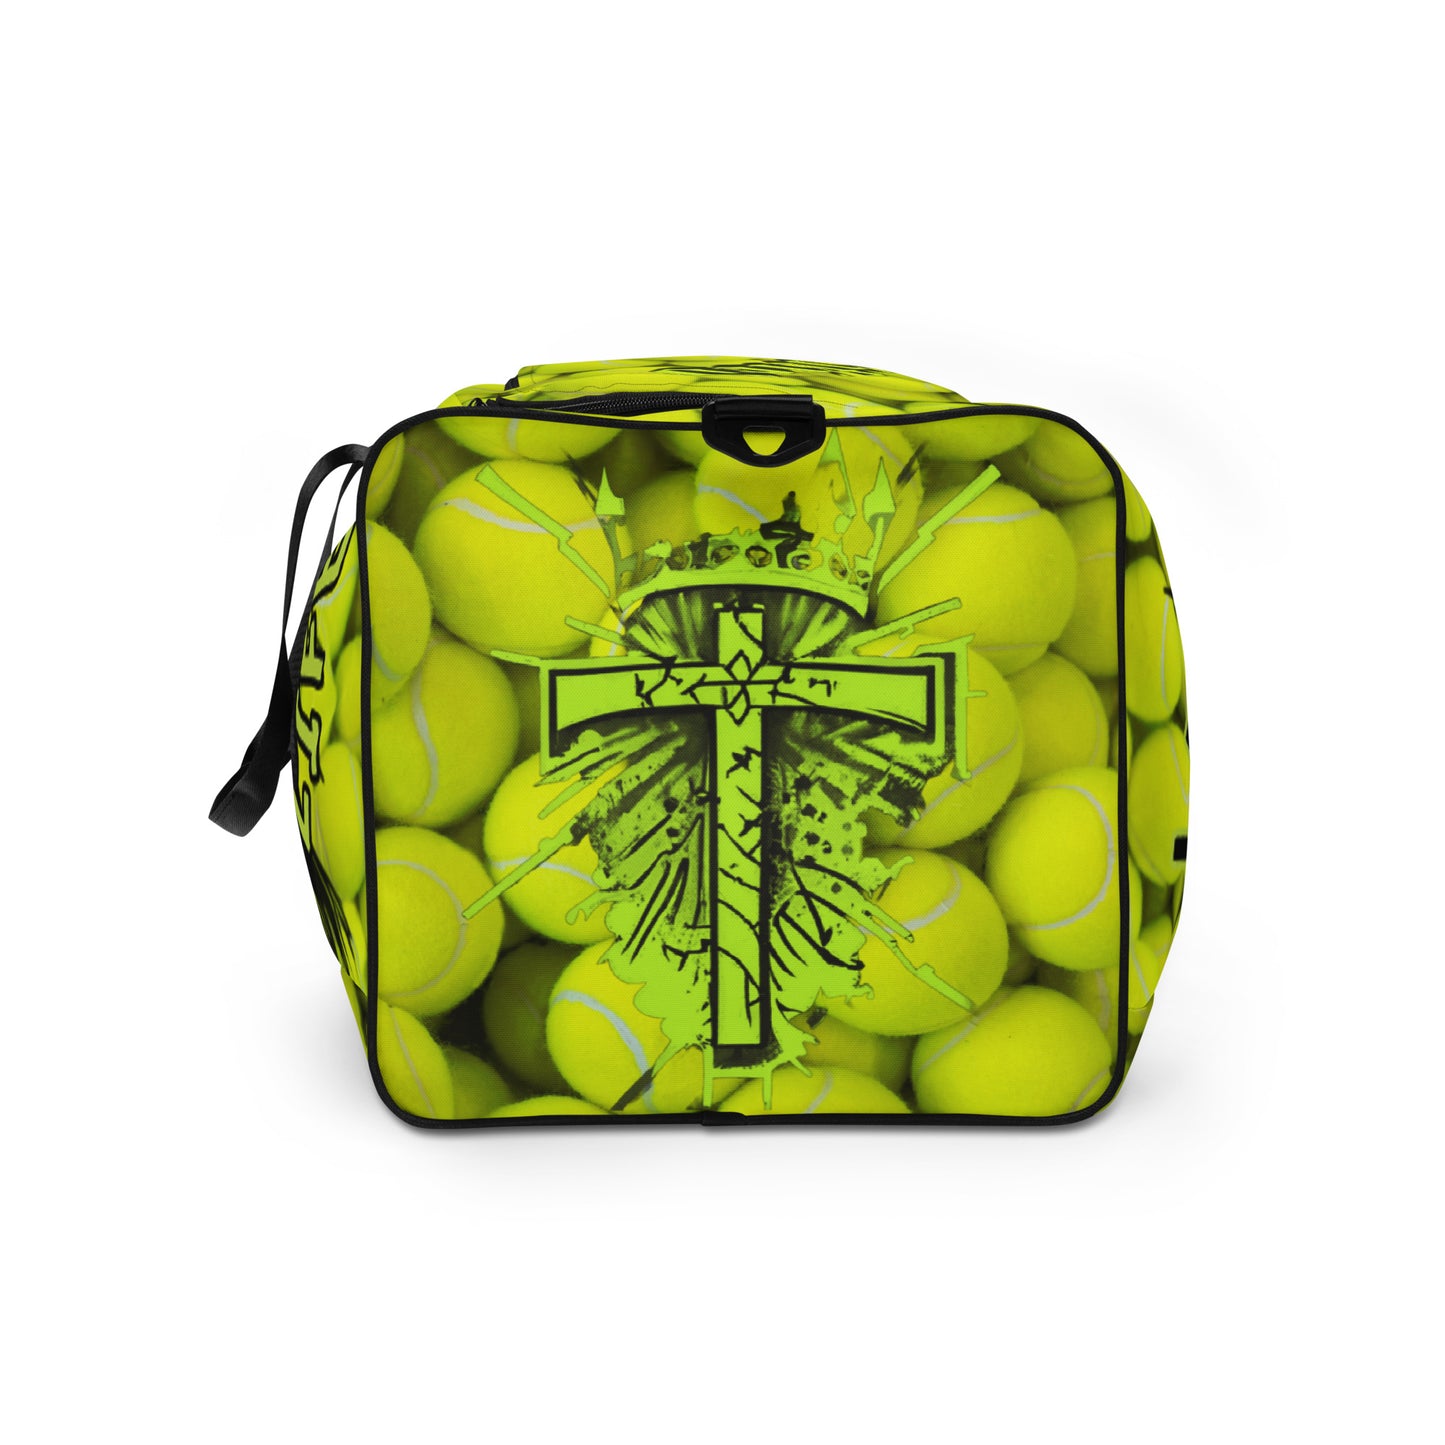 Jesus Fan 4Life- Tennis Duffle bag